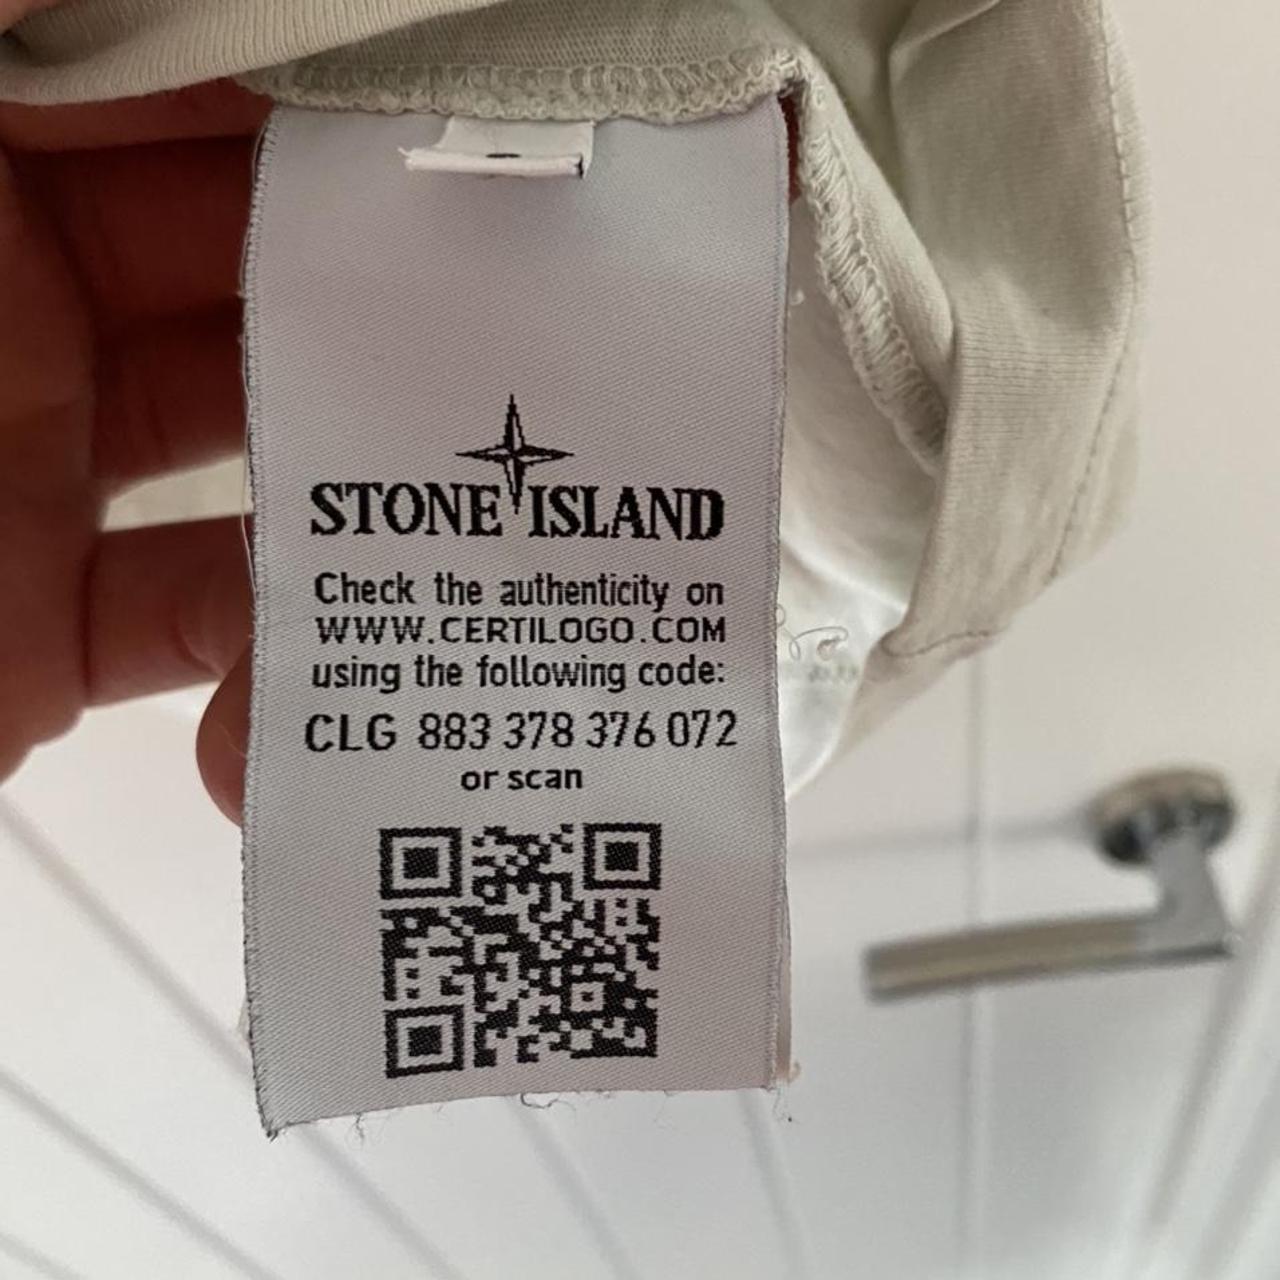 Stone island t shirt digital camo Size large Very... - Depop